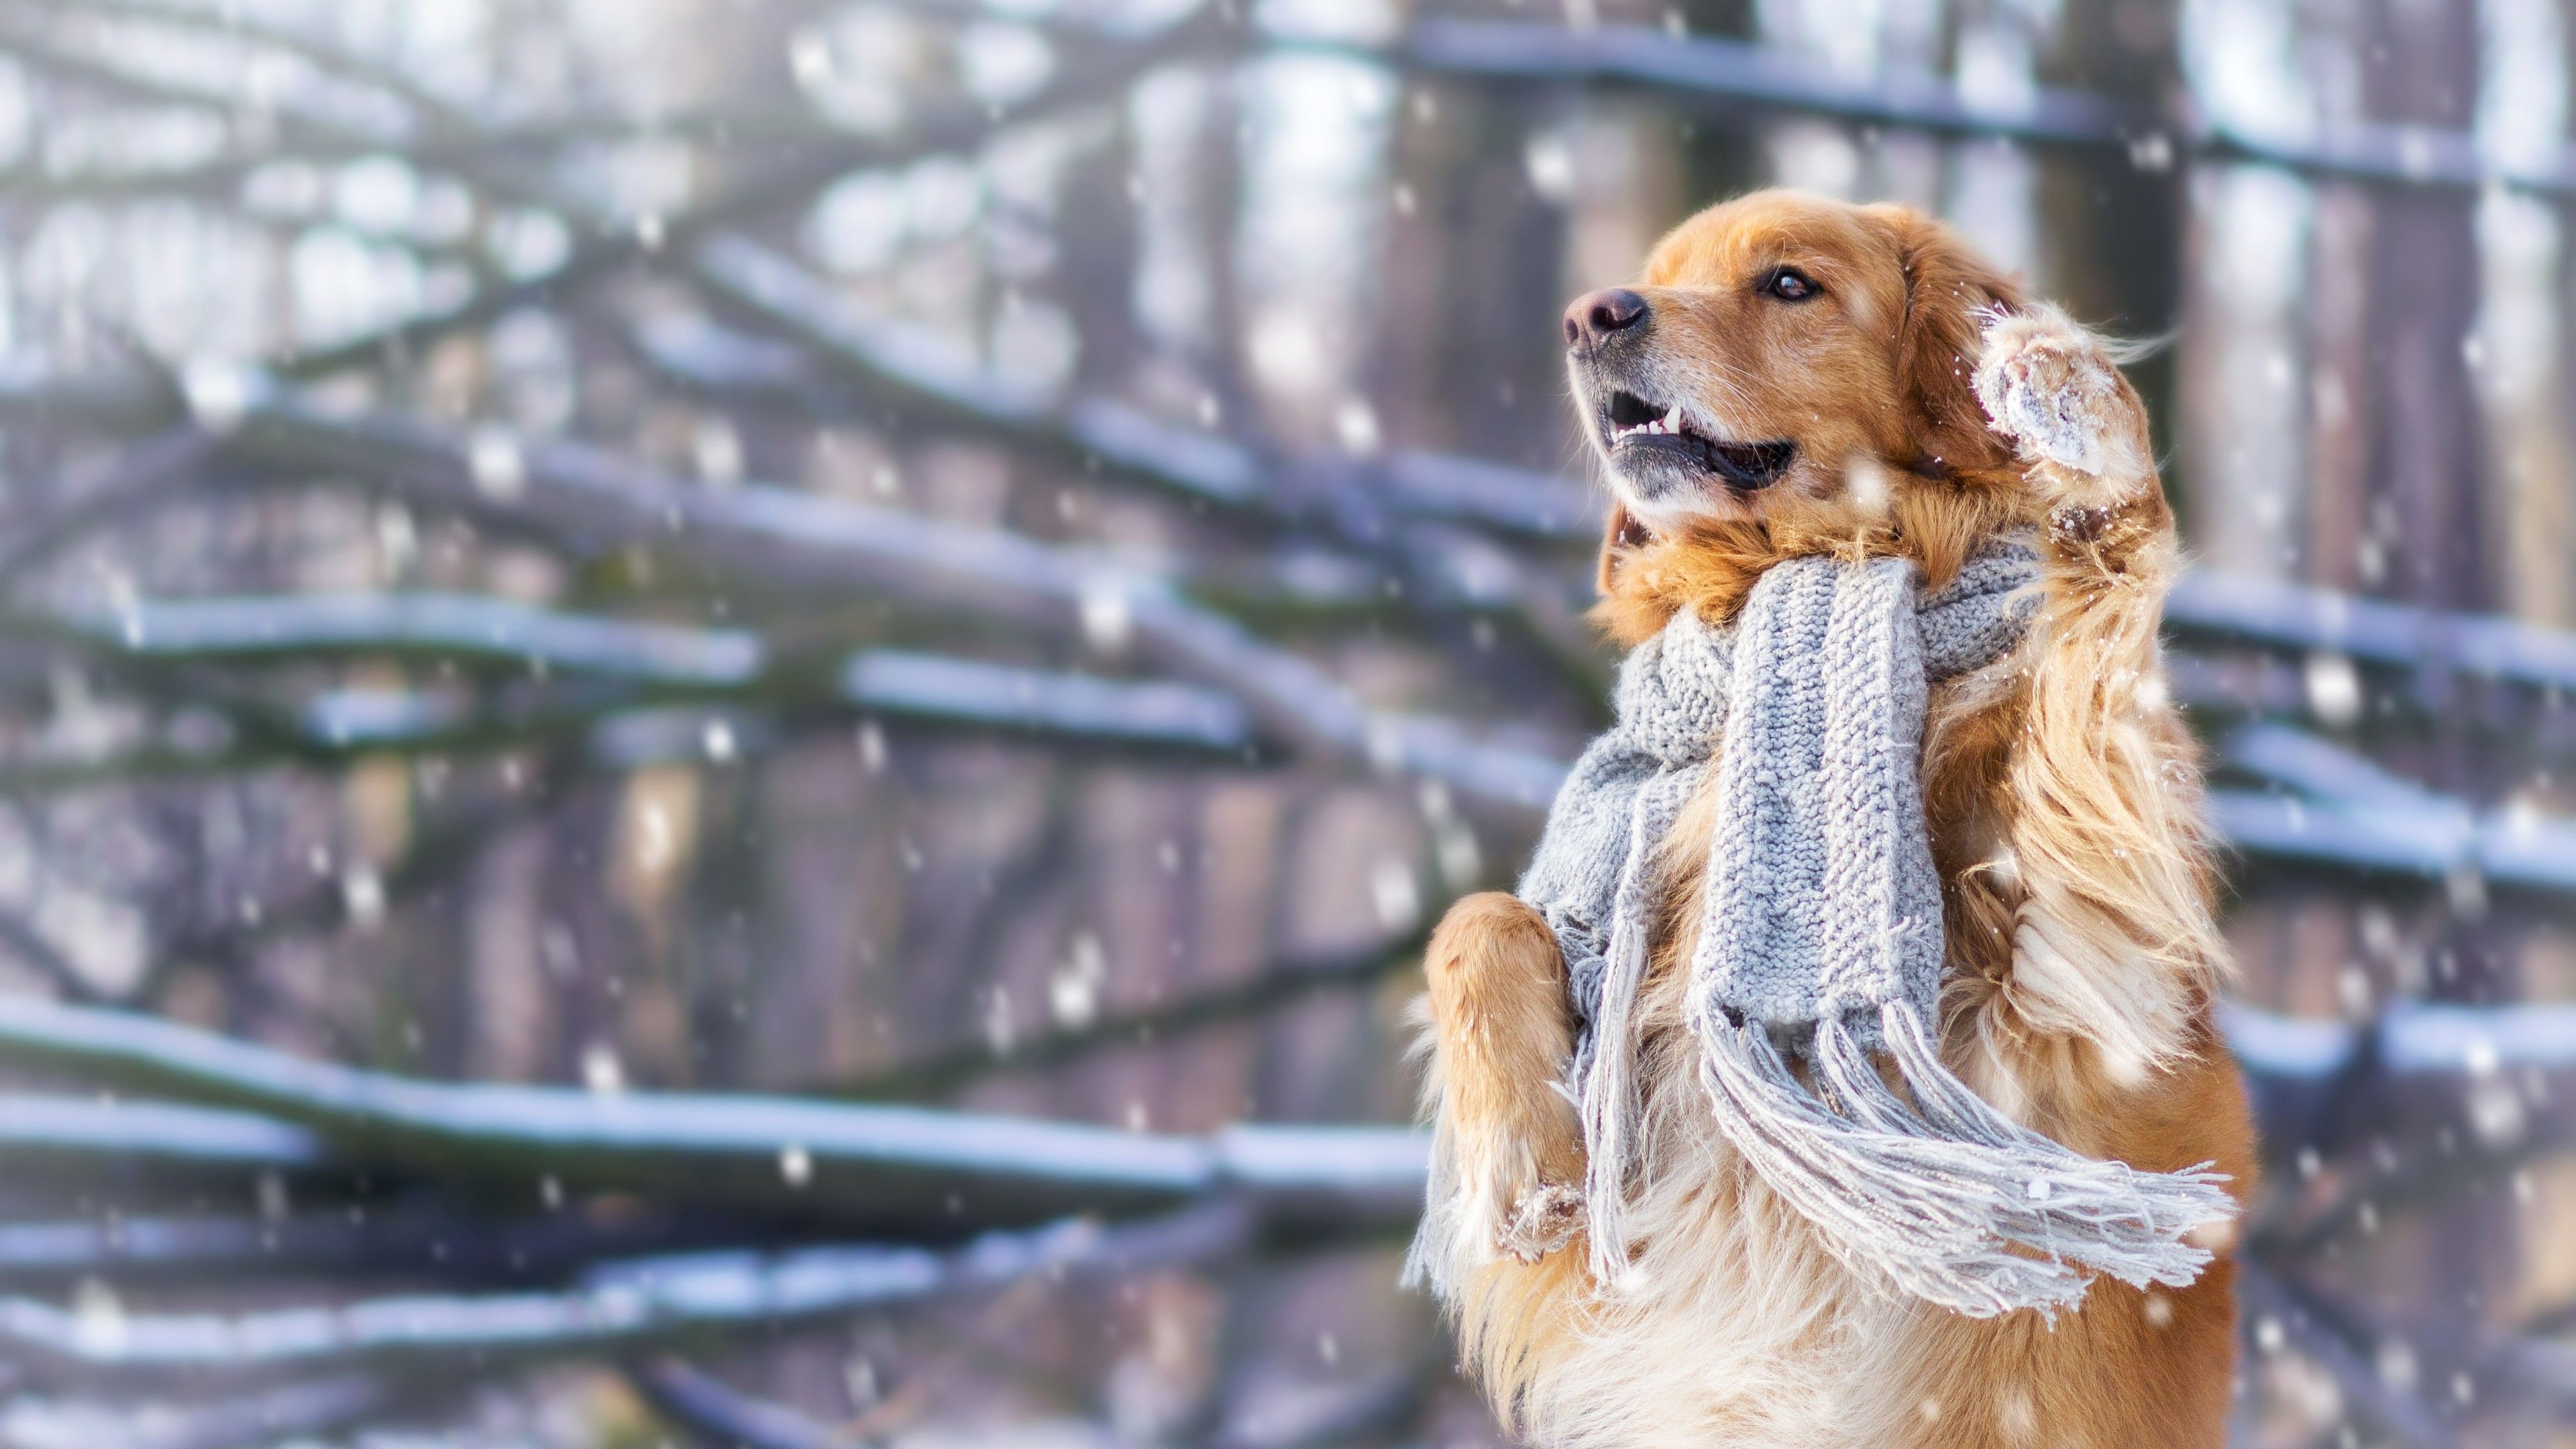 Wallpaper dog, cute animals, snow, winter, 4k, Animals